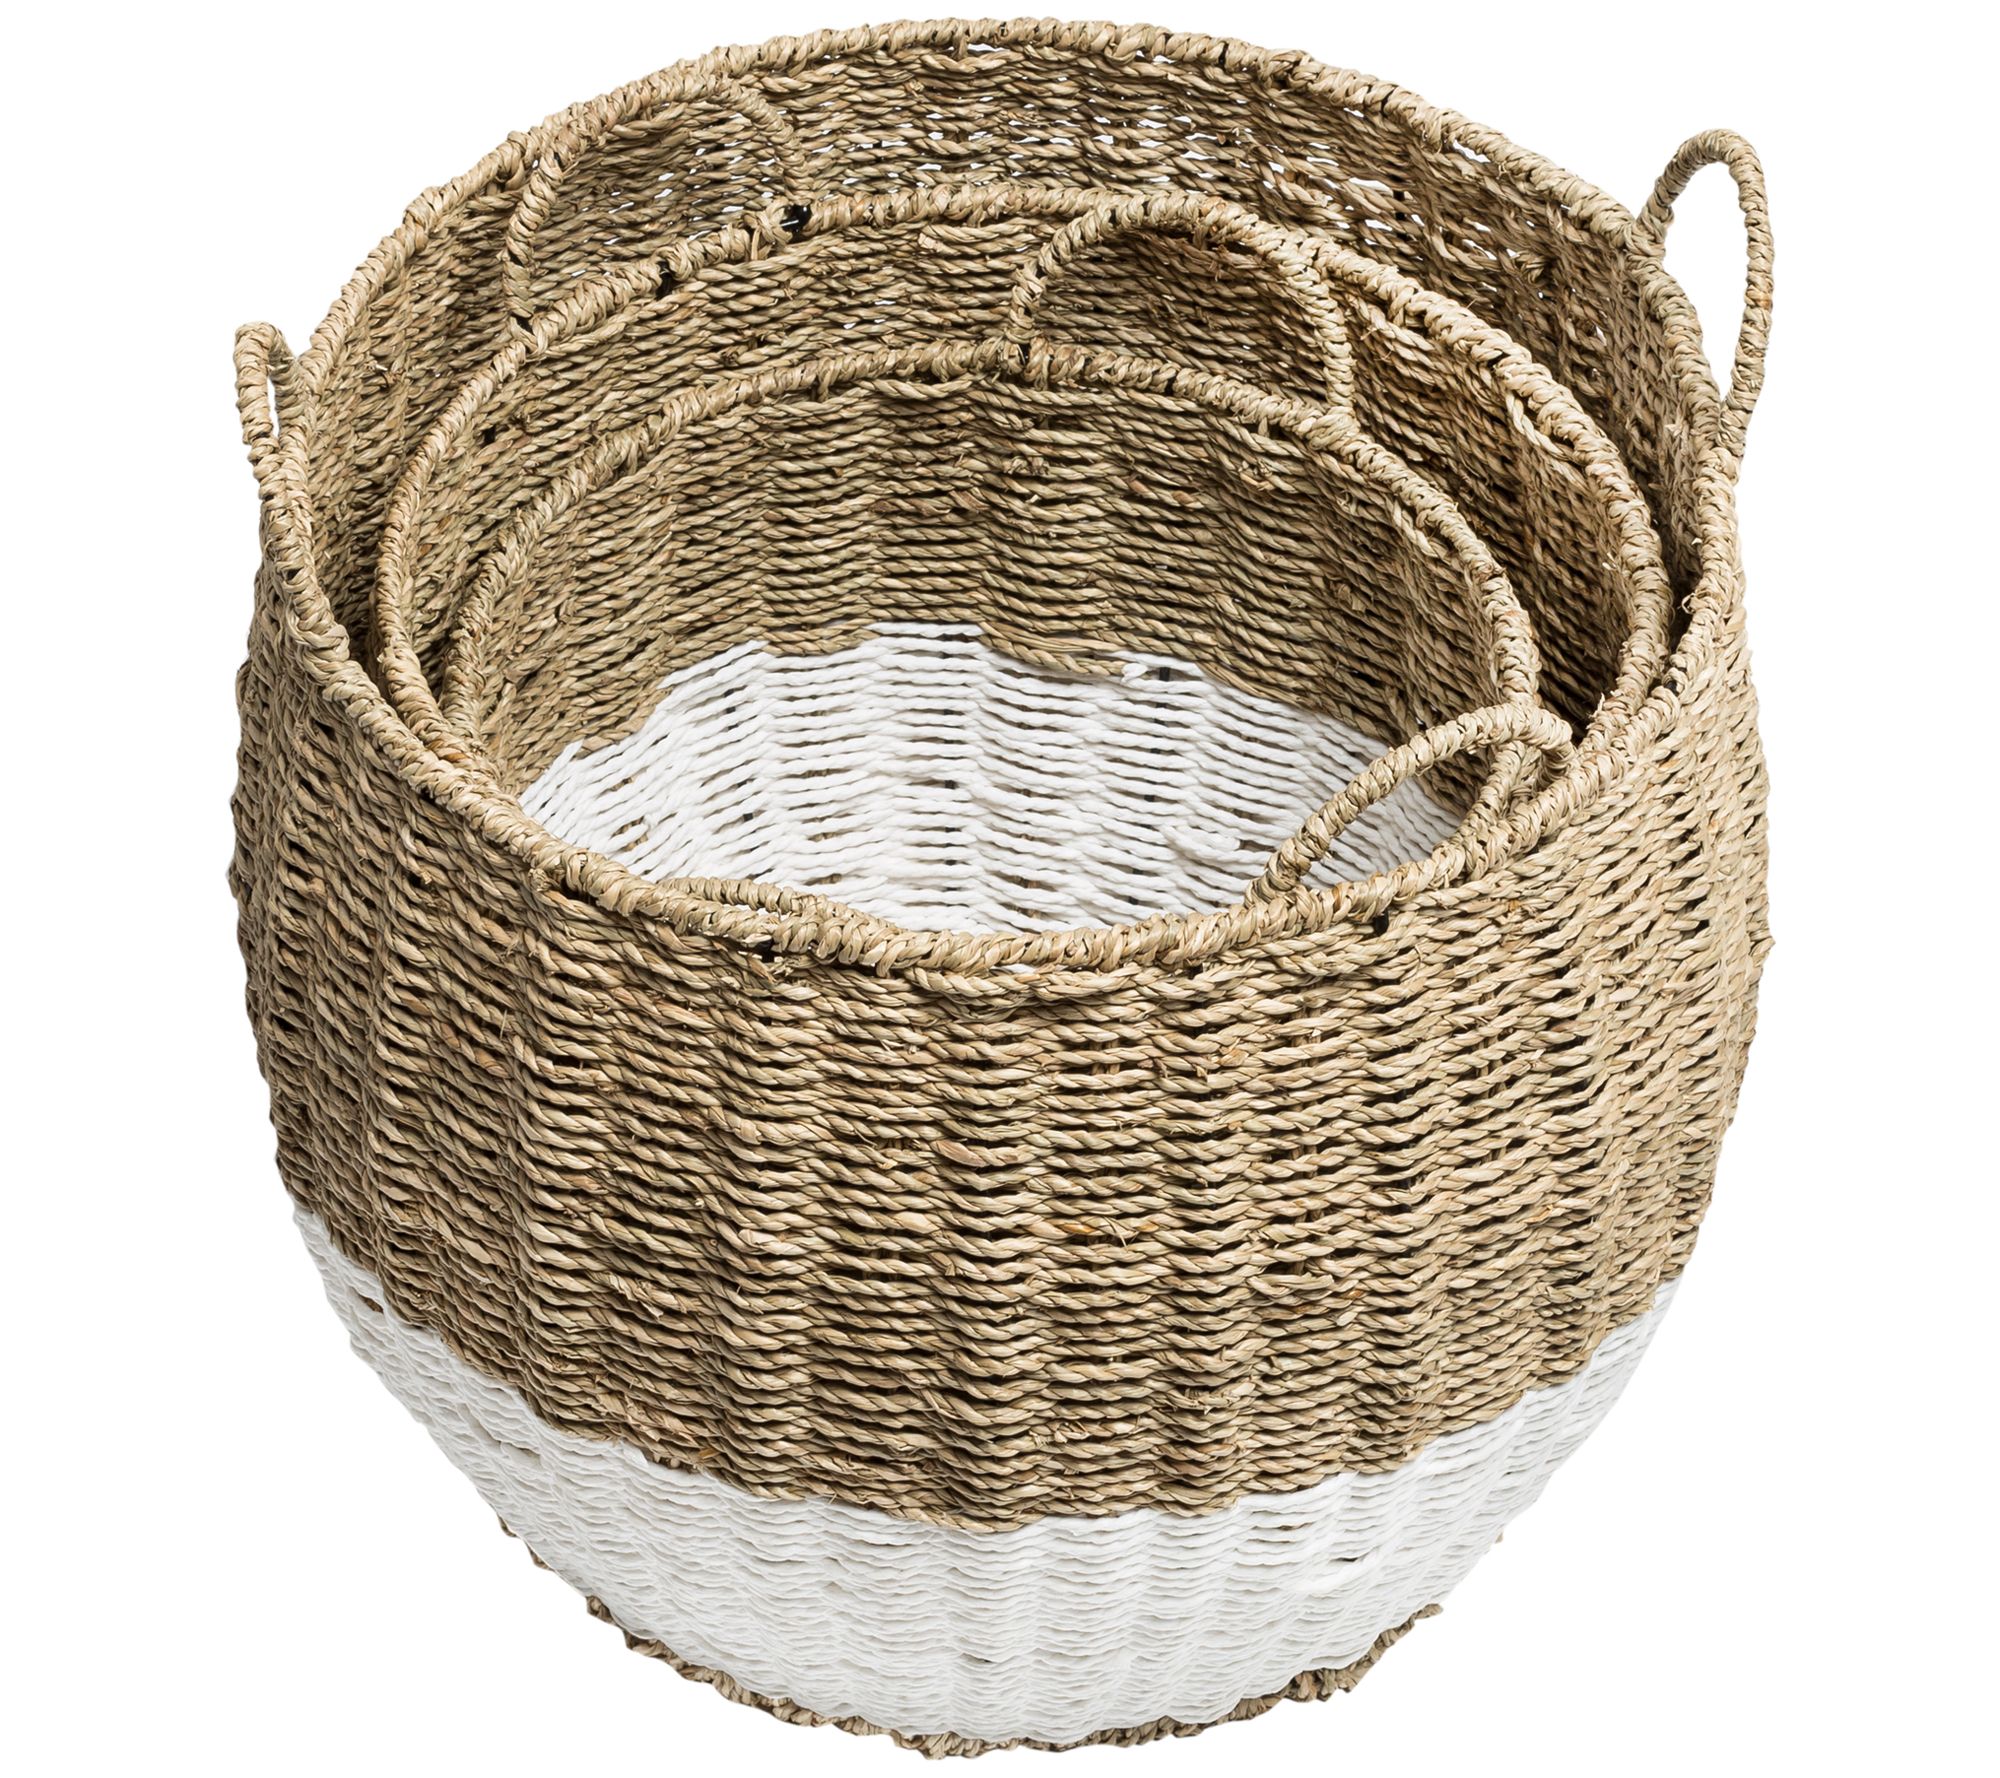 Honey-Can-Do Cotton Rope Nesting Storage Basket Set, Blue Ombre